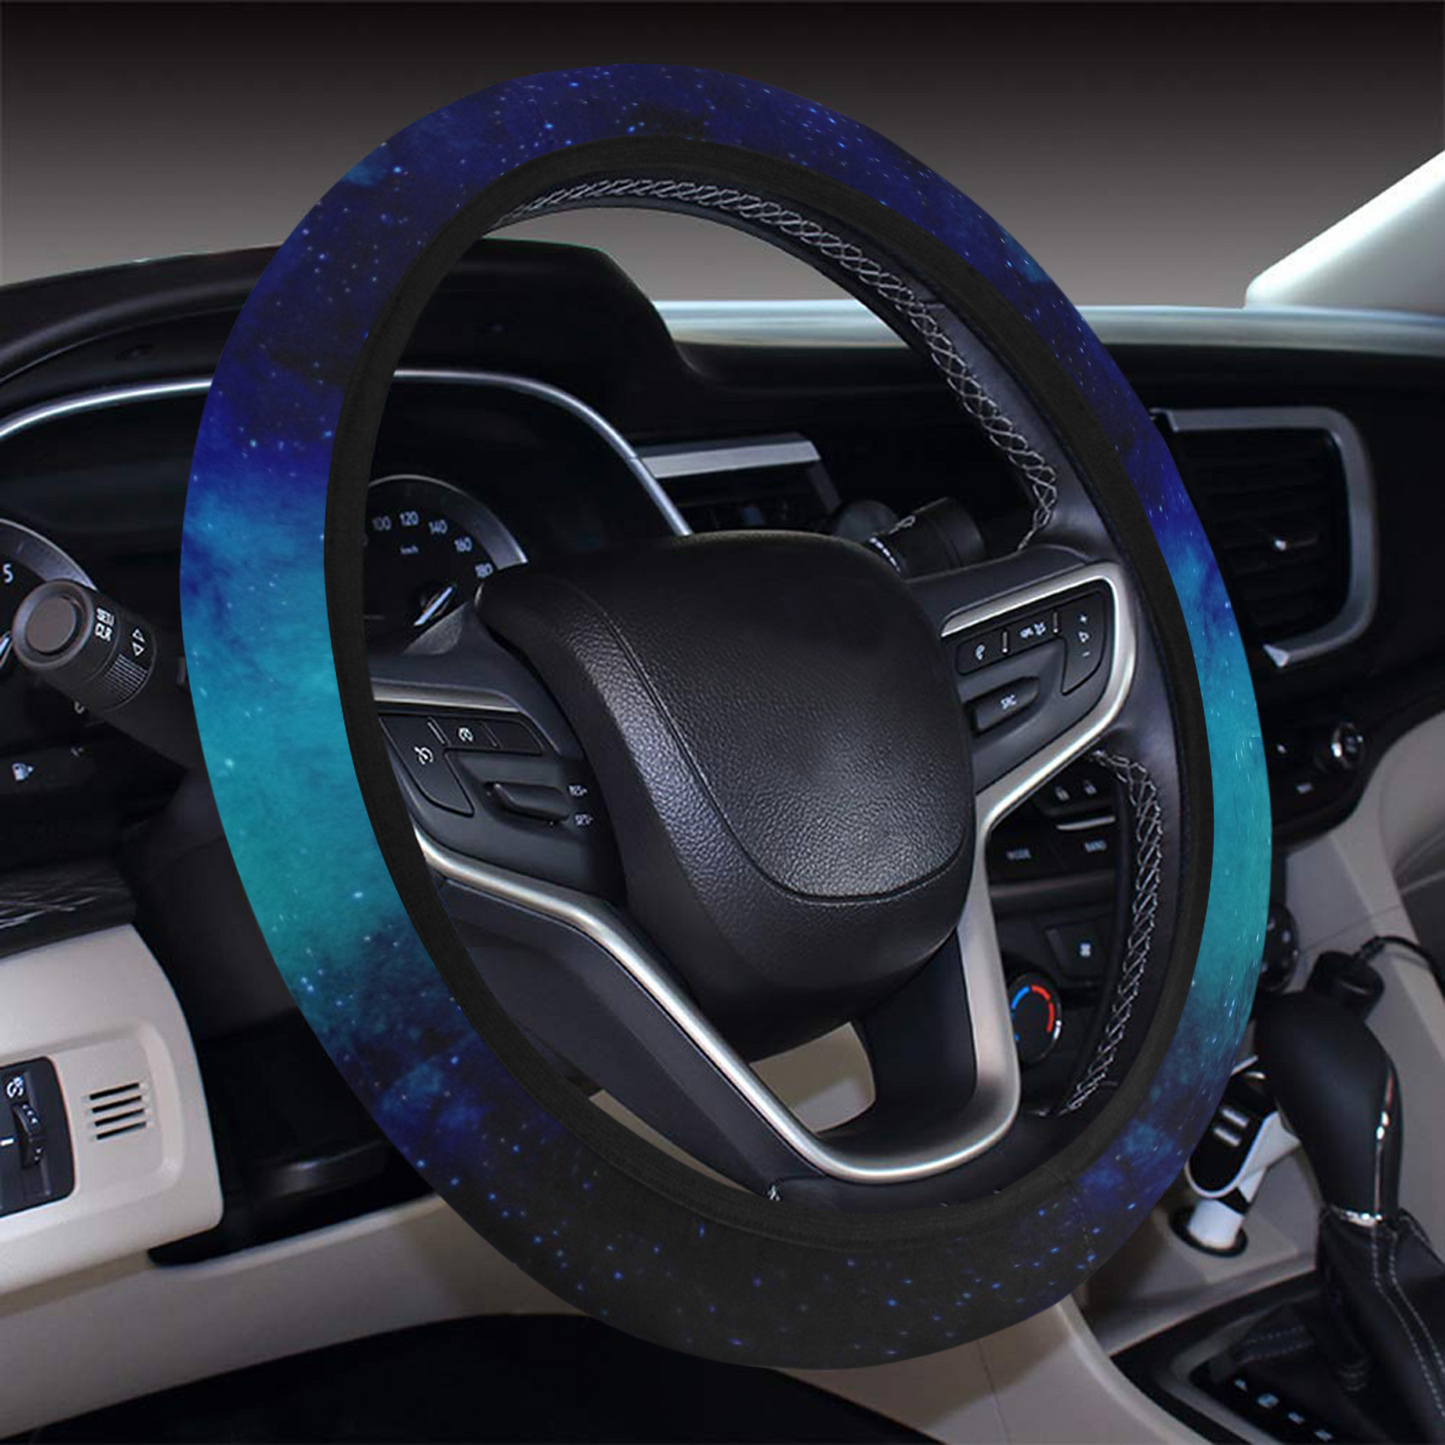 Neoprene Galaxy Car Steering Wheel Cover Turquoise Blue